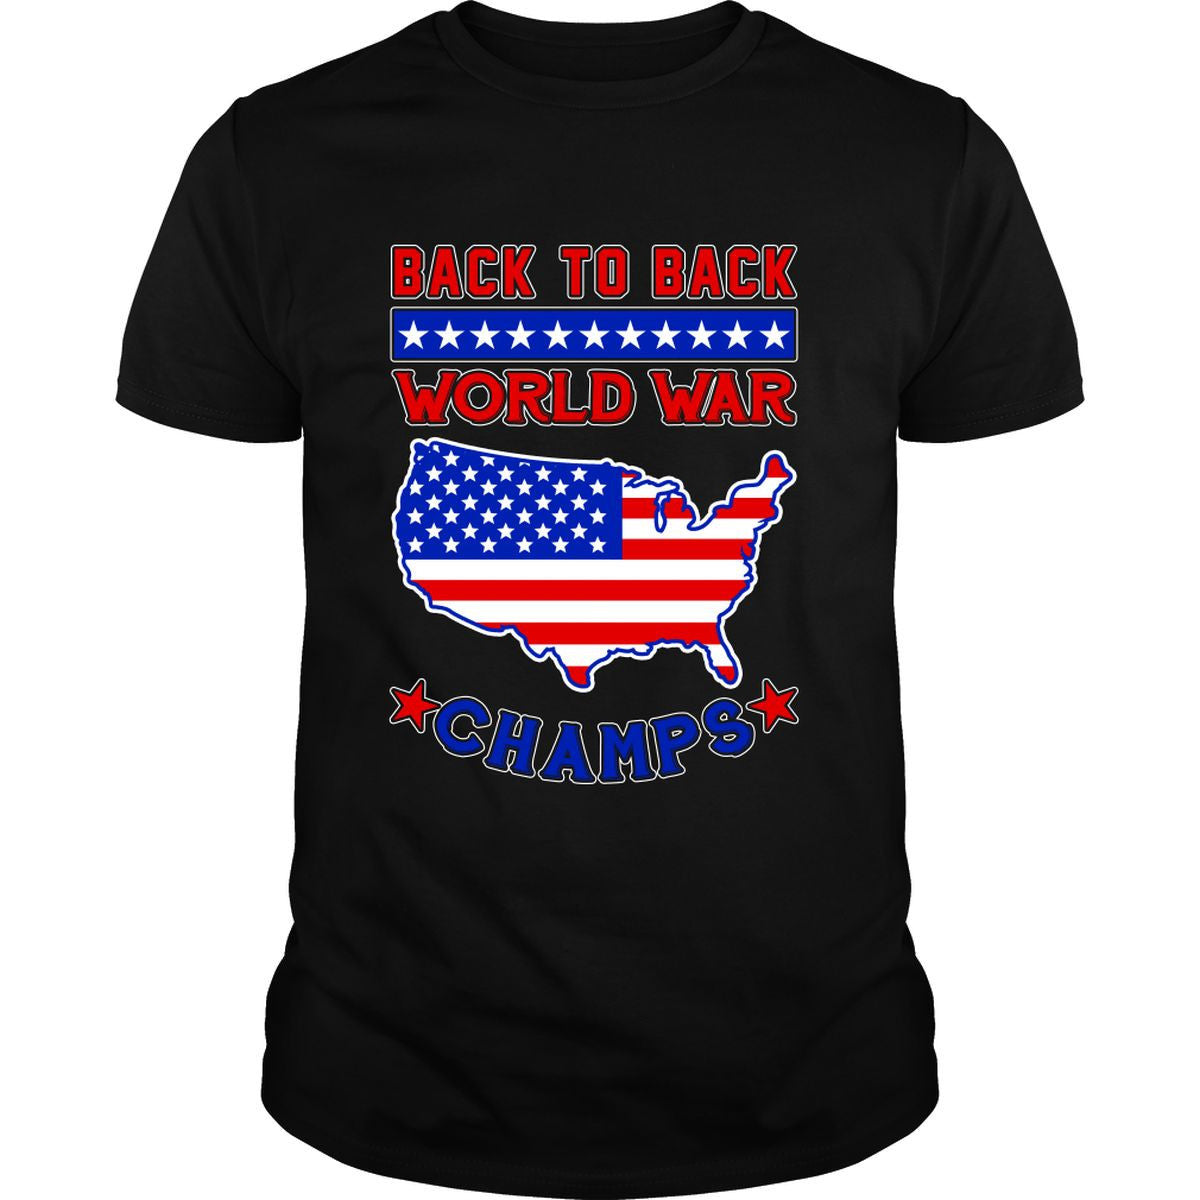 Back To Back World War Champs Shirt (Black)